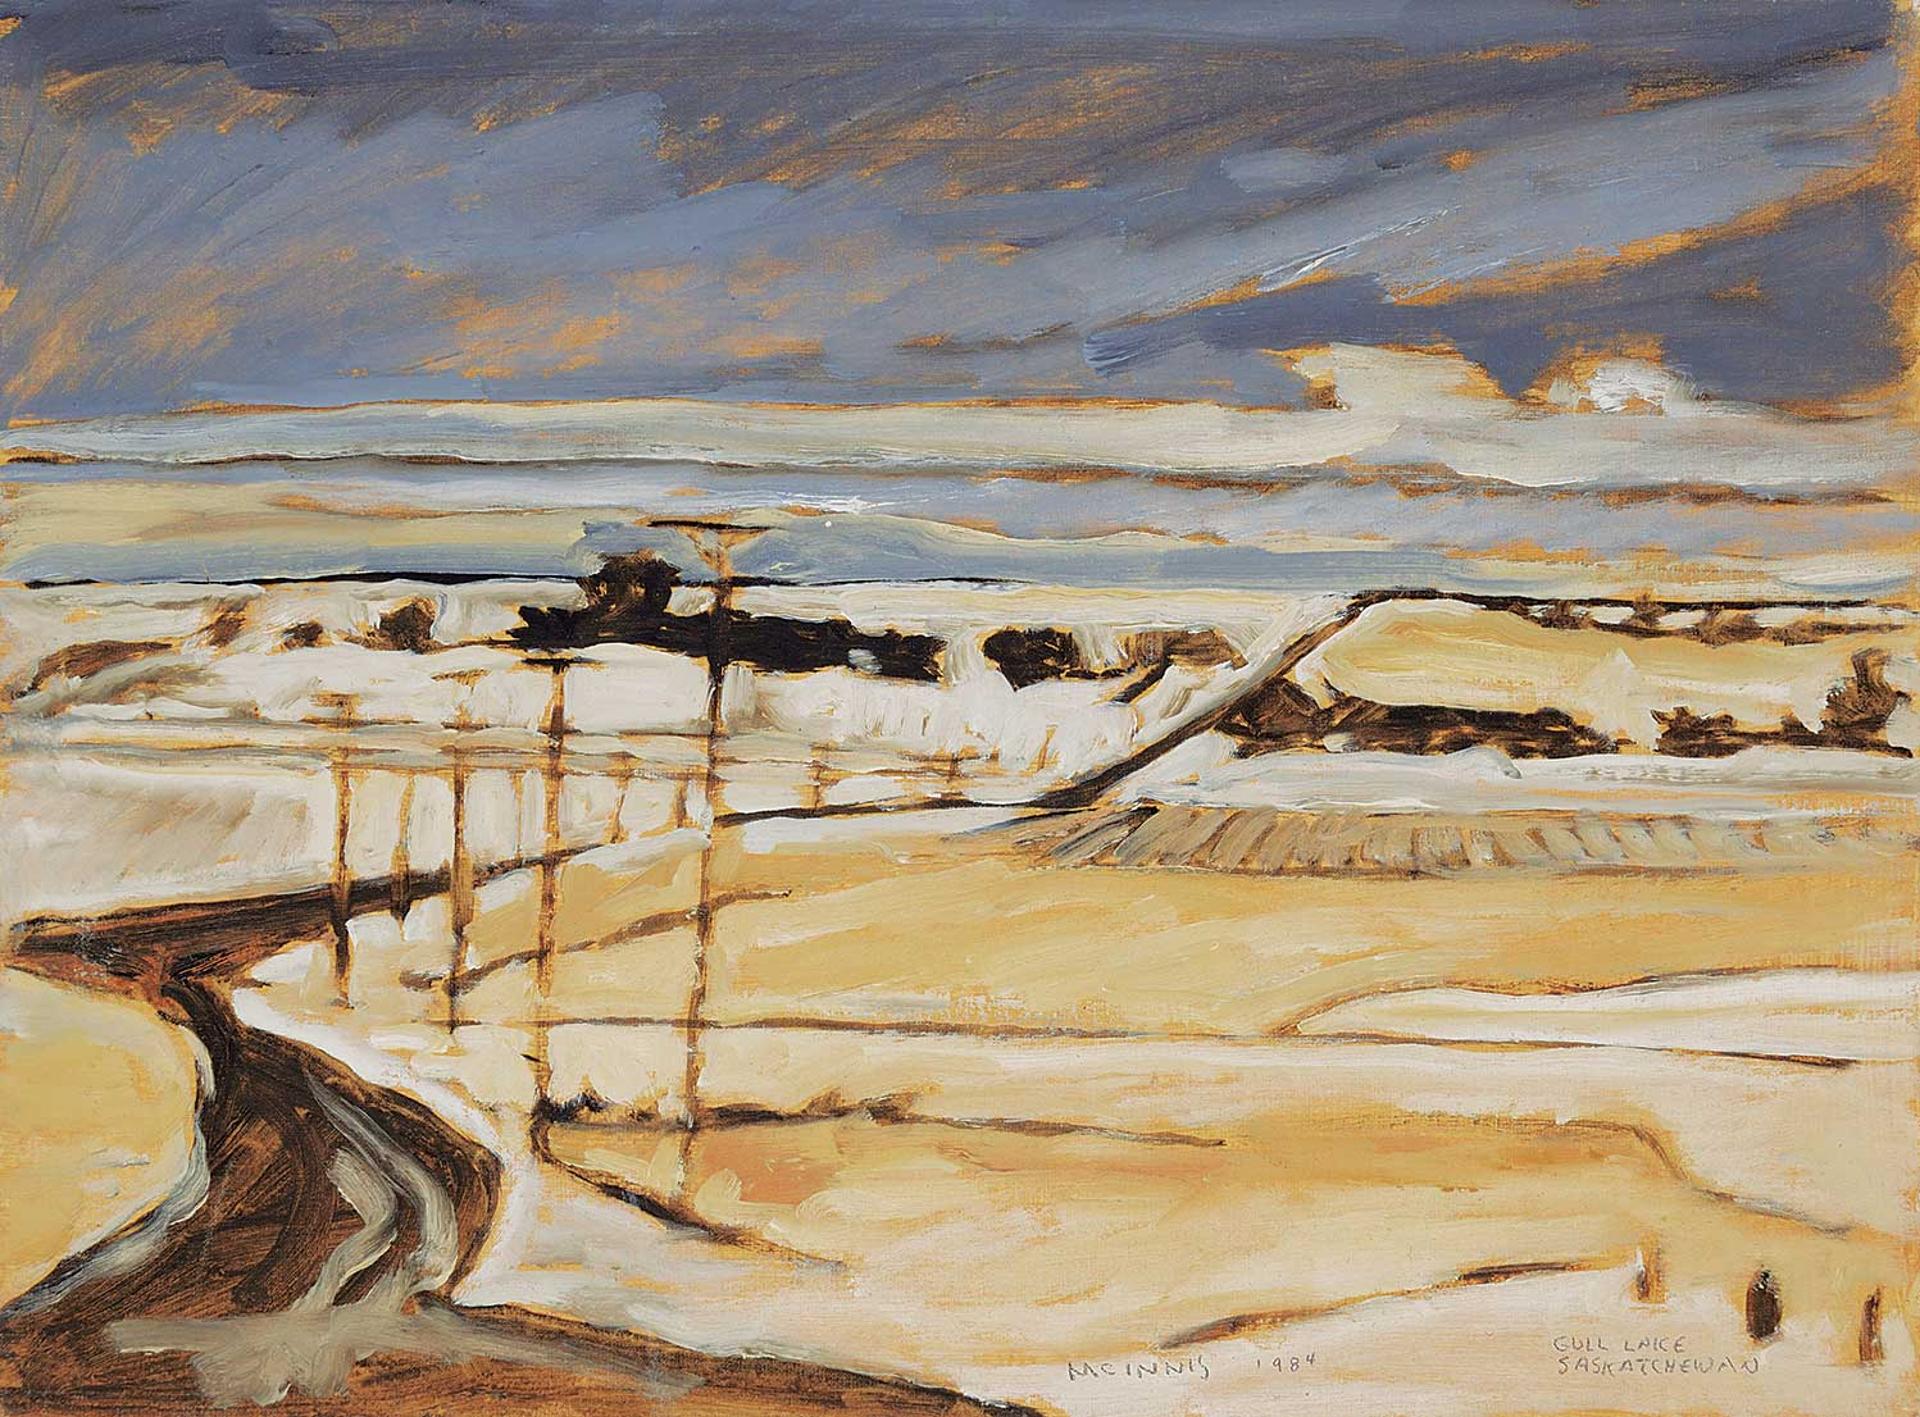 Robert Francis Michael McInnis (1942) - View from Gull Lake, Sask.